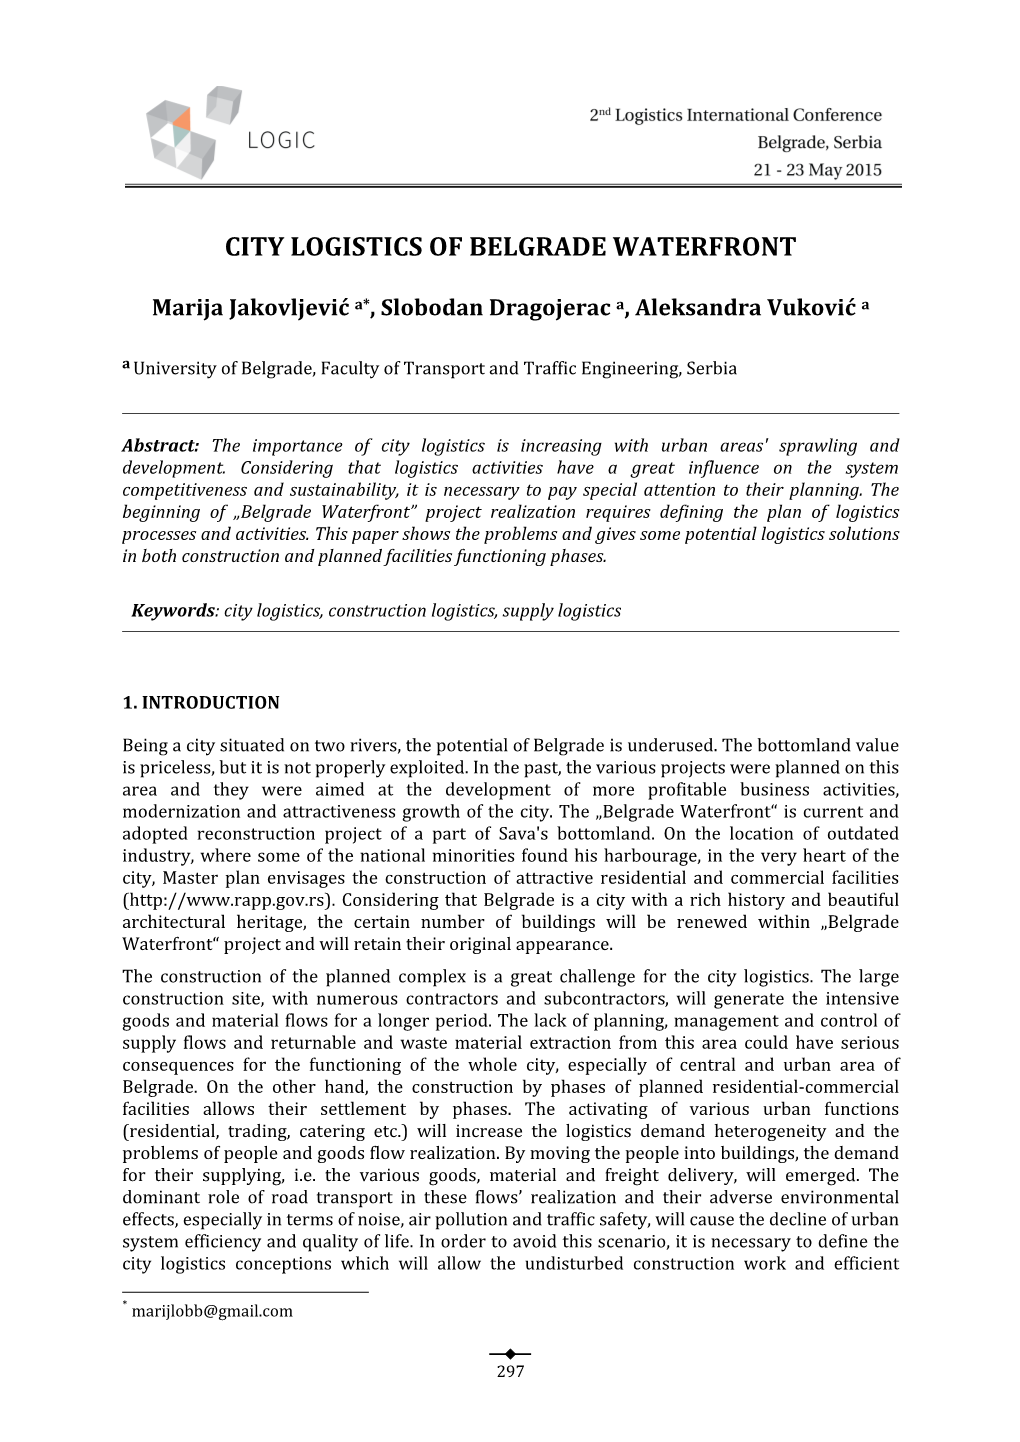 City Logistics of Belgrade Waterfront